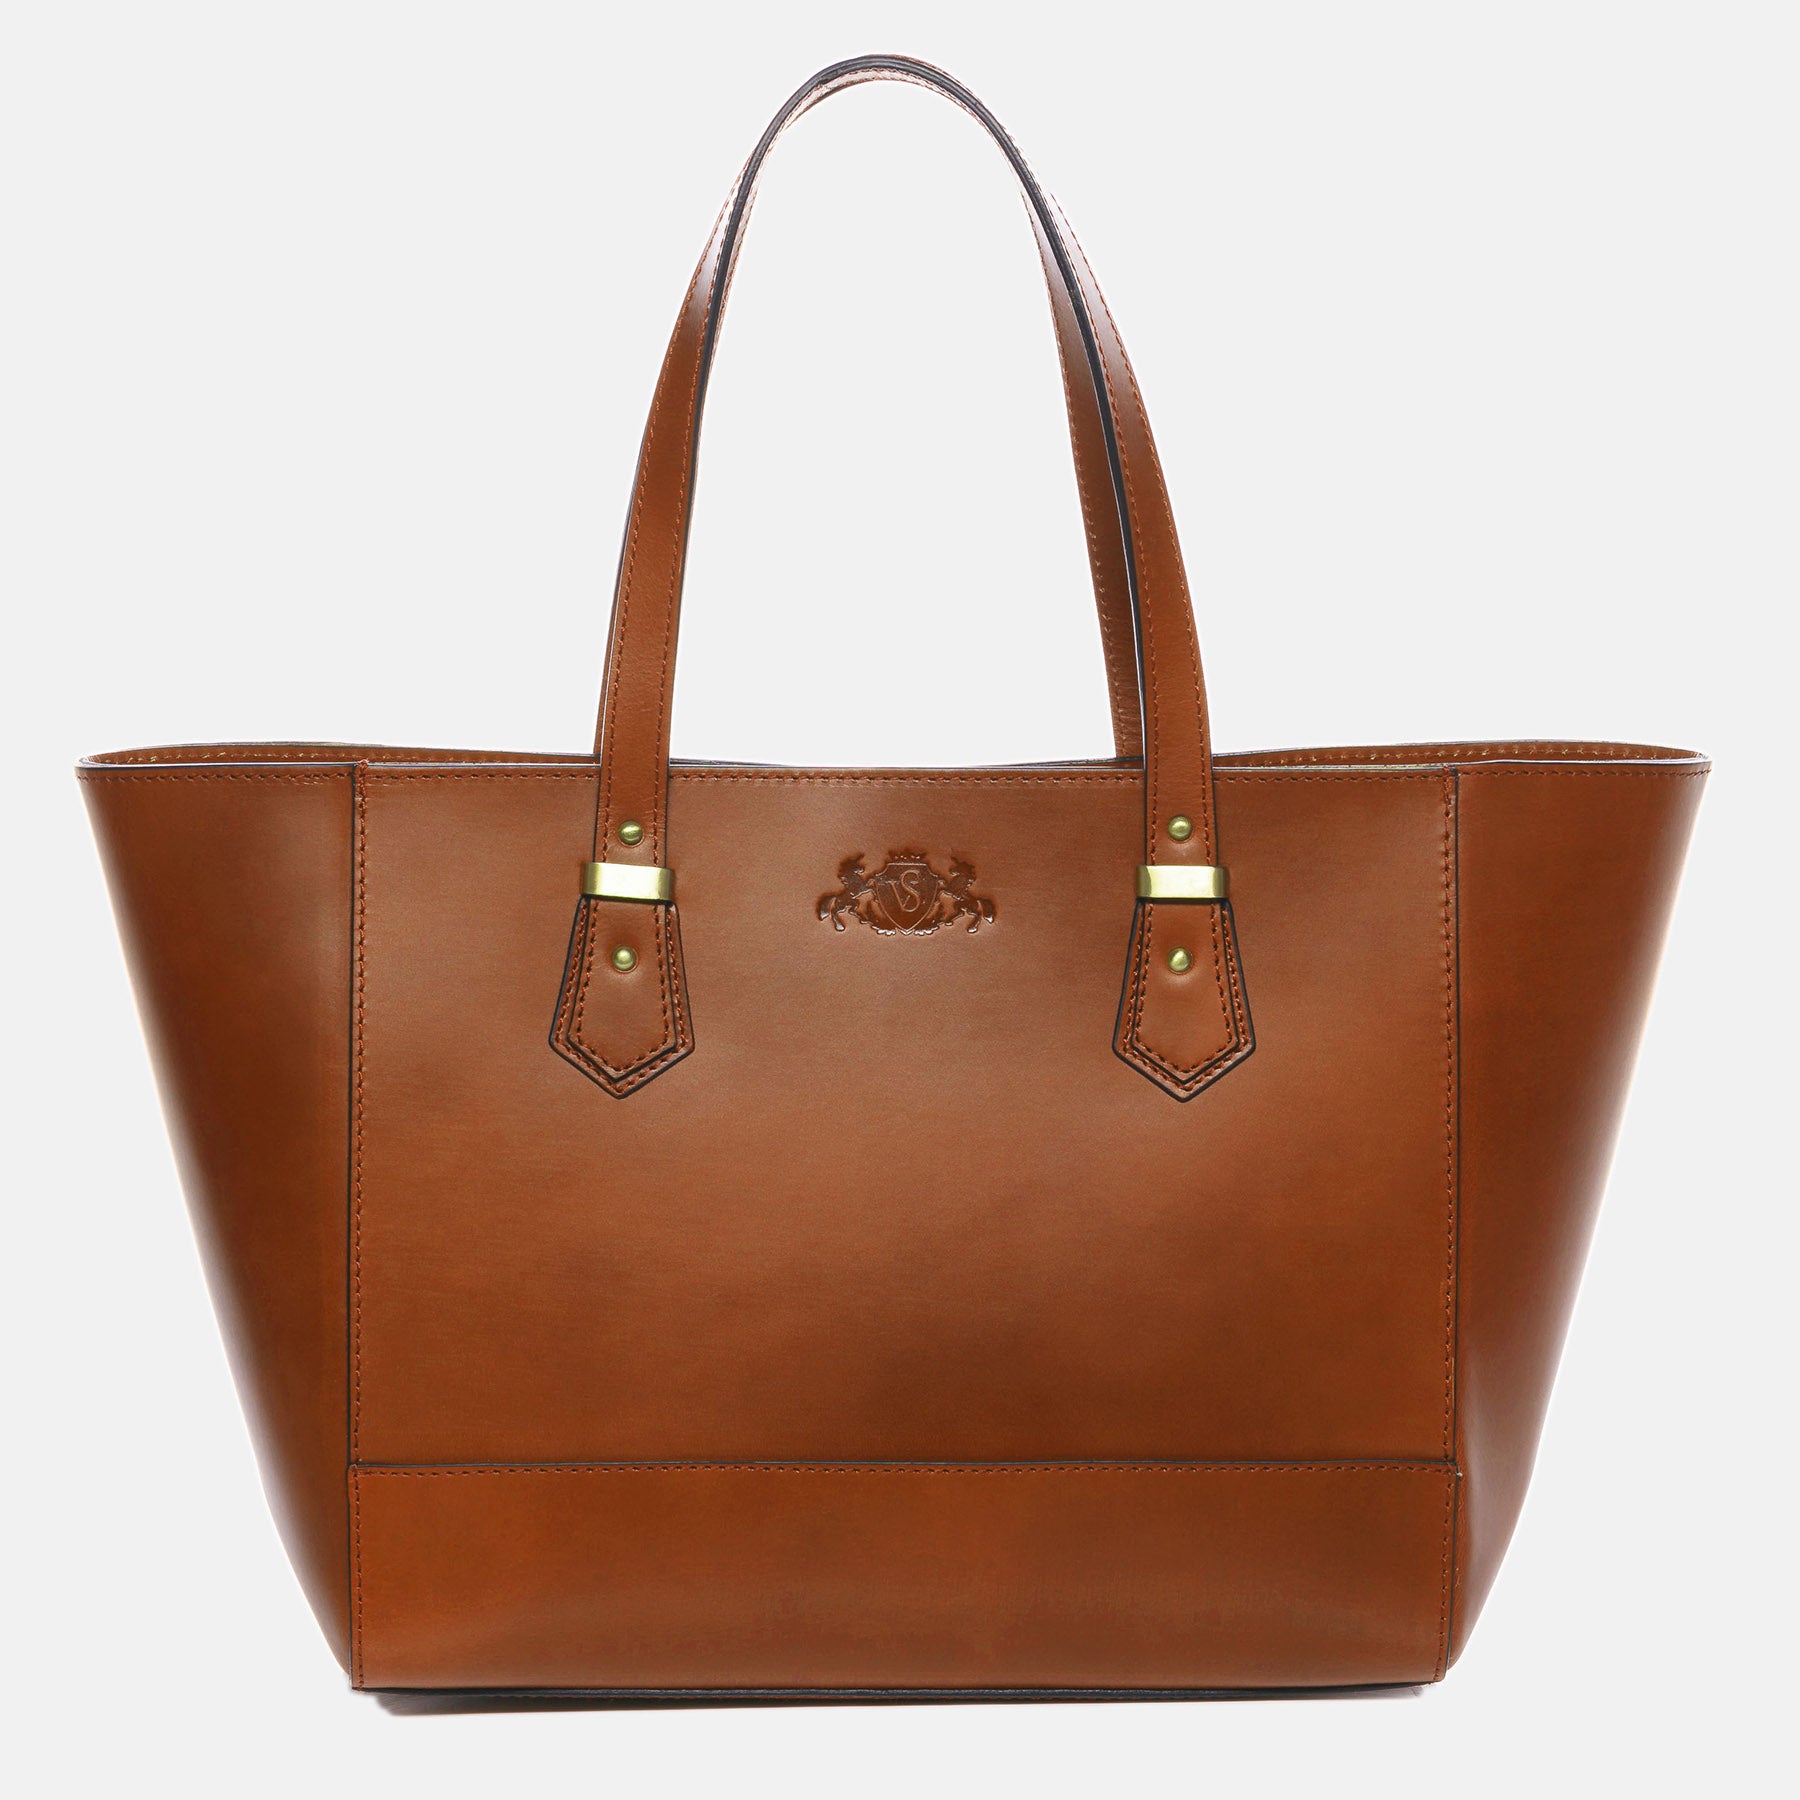 Handbag TRISH saddle leather light brown-cognac